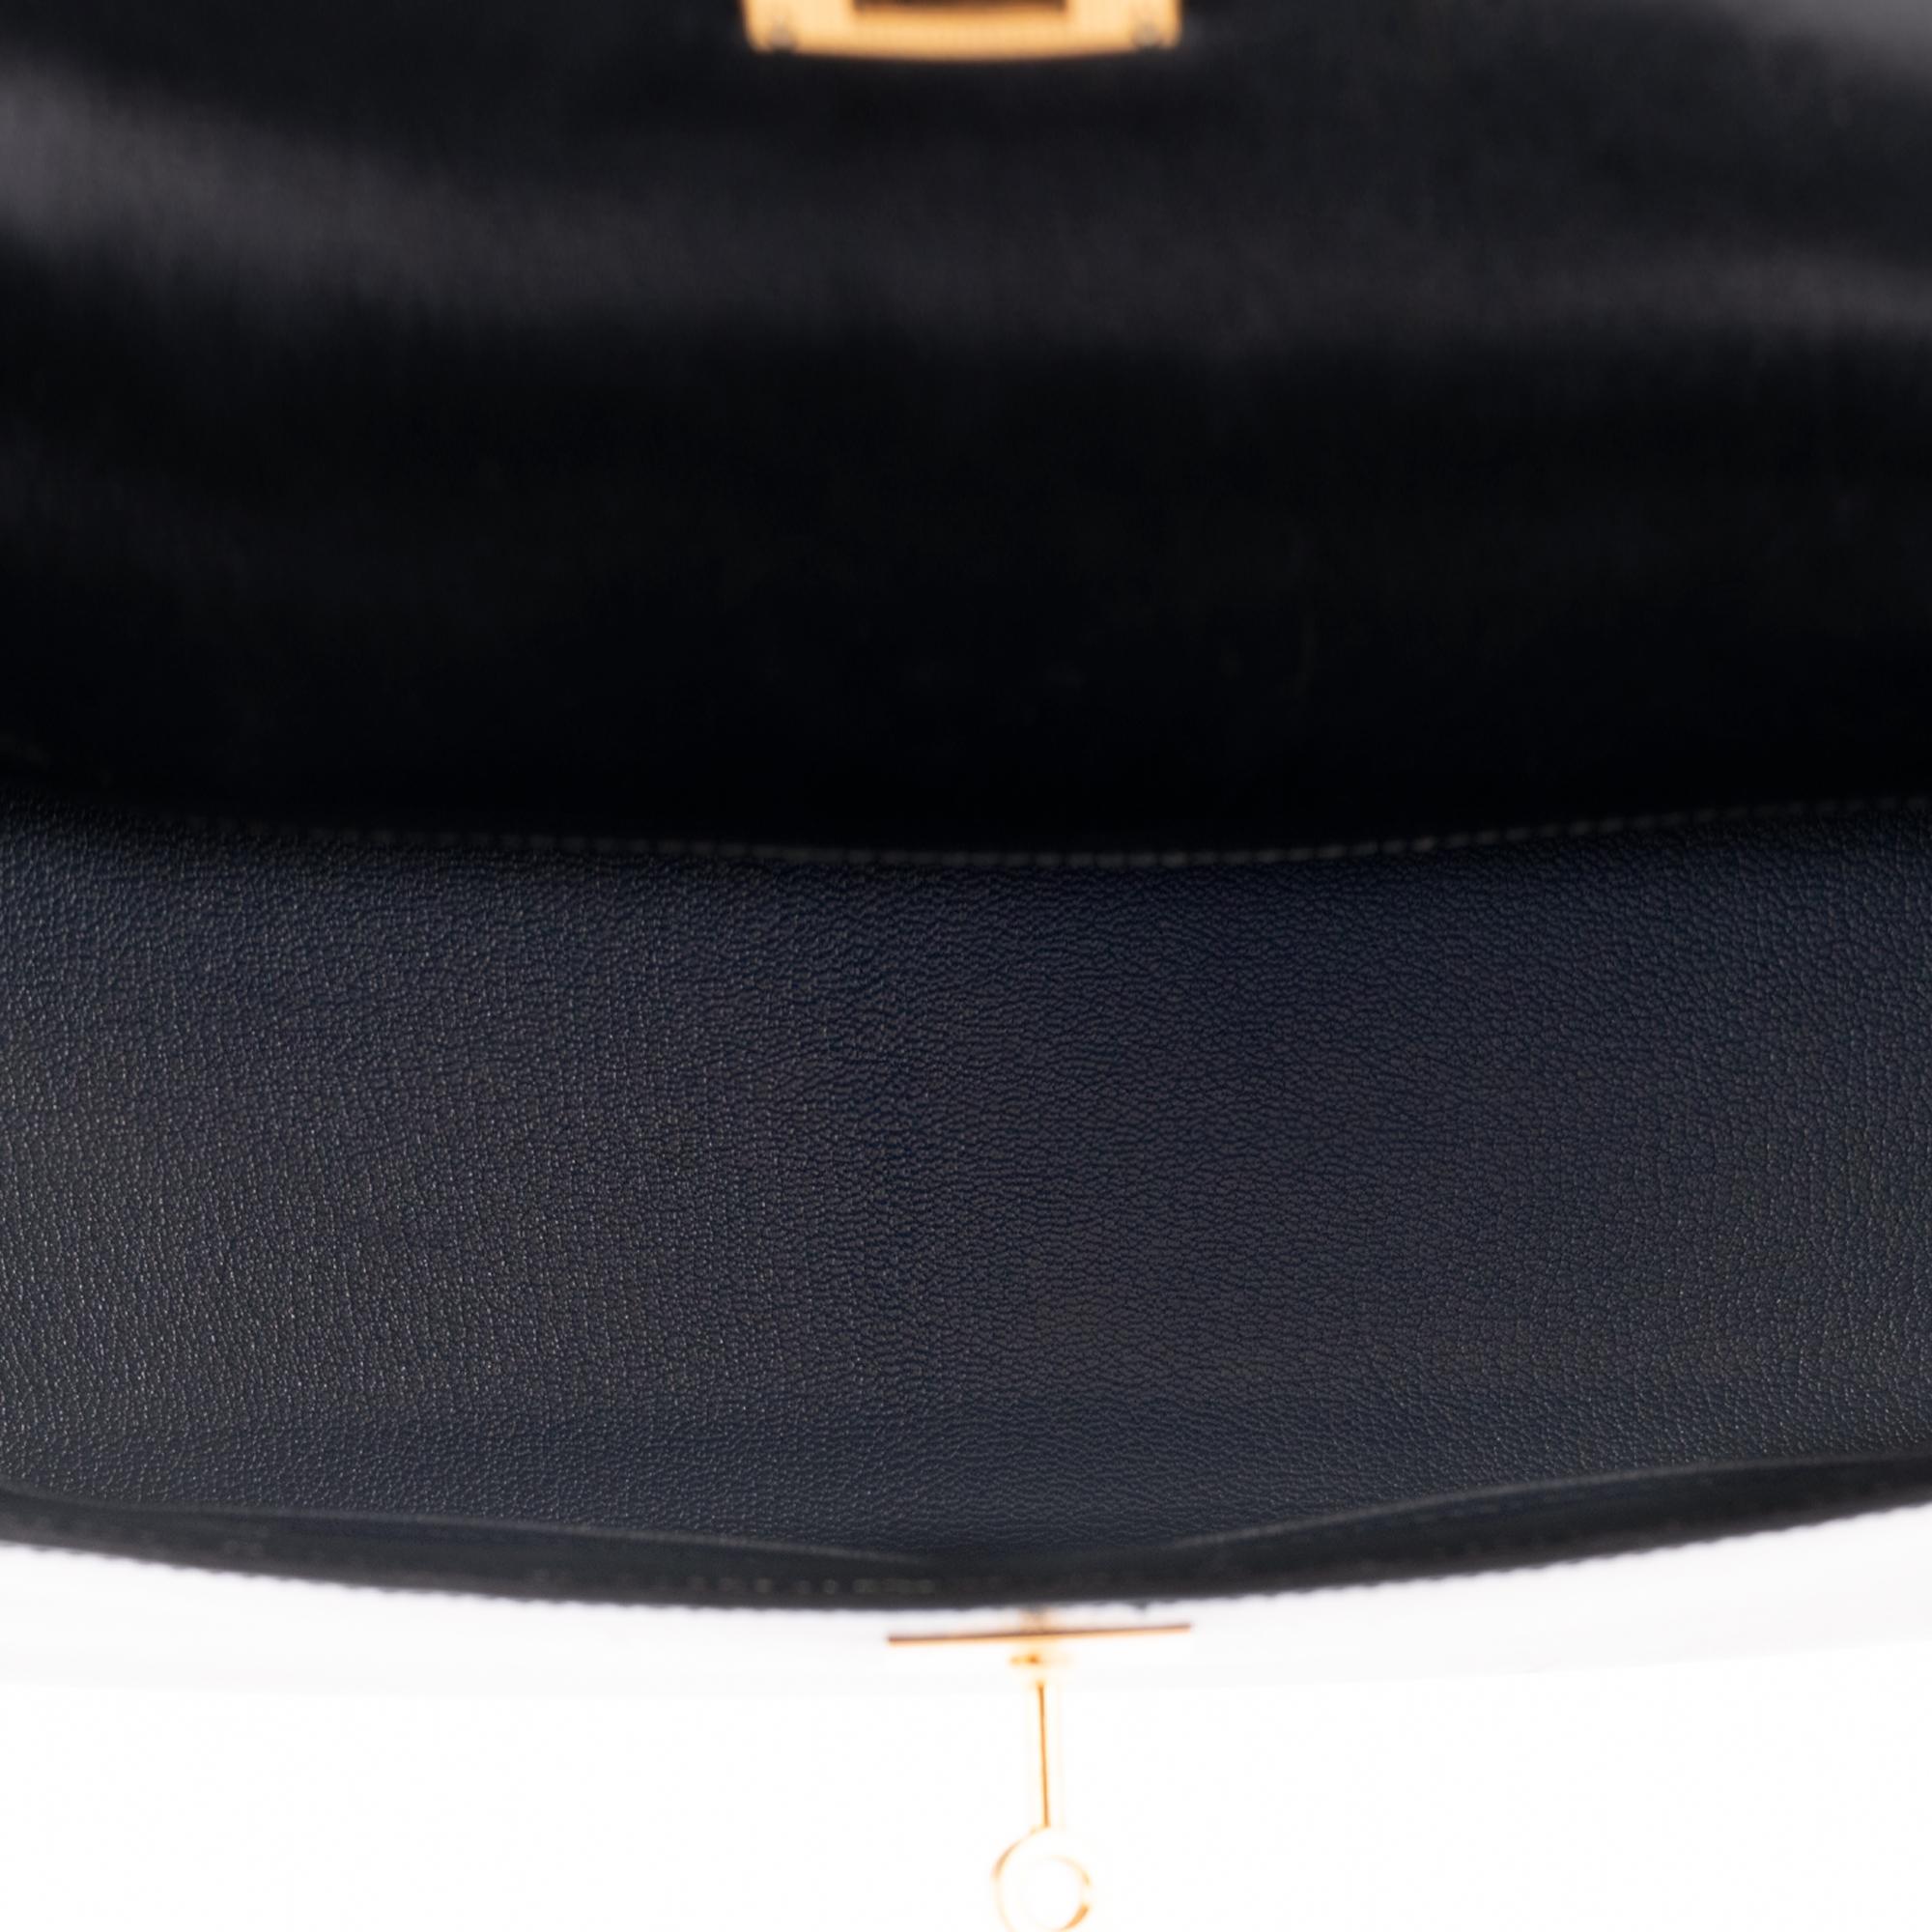 Very limited Handbag Hermès Kelly sellier 32 with strap in black calfskin, GHW! 2